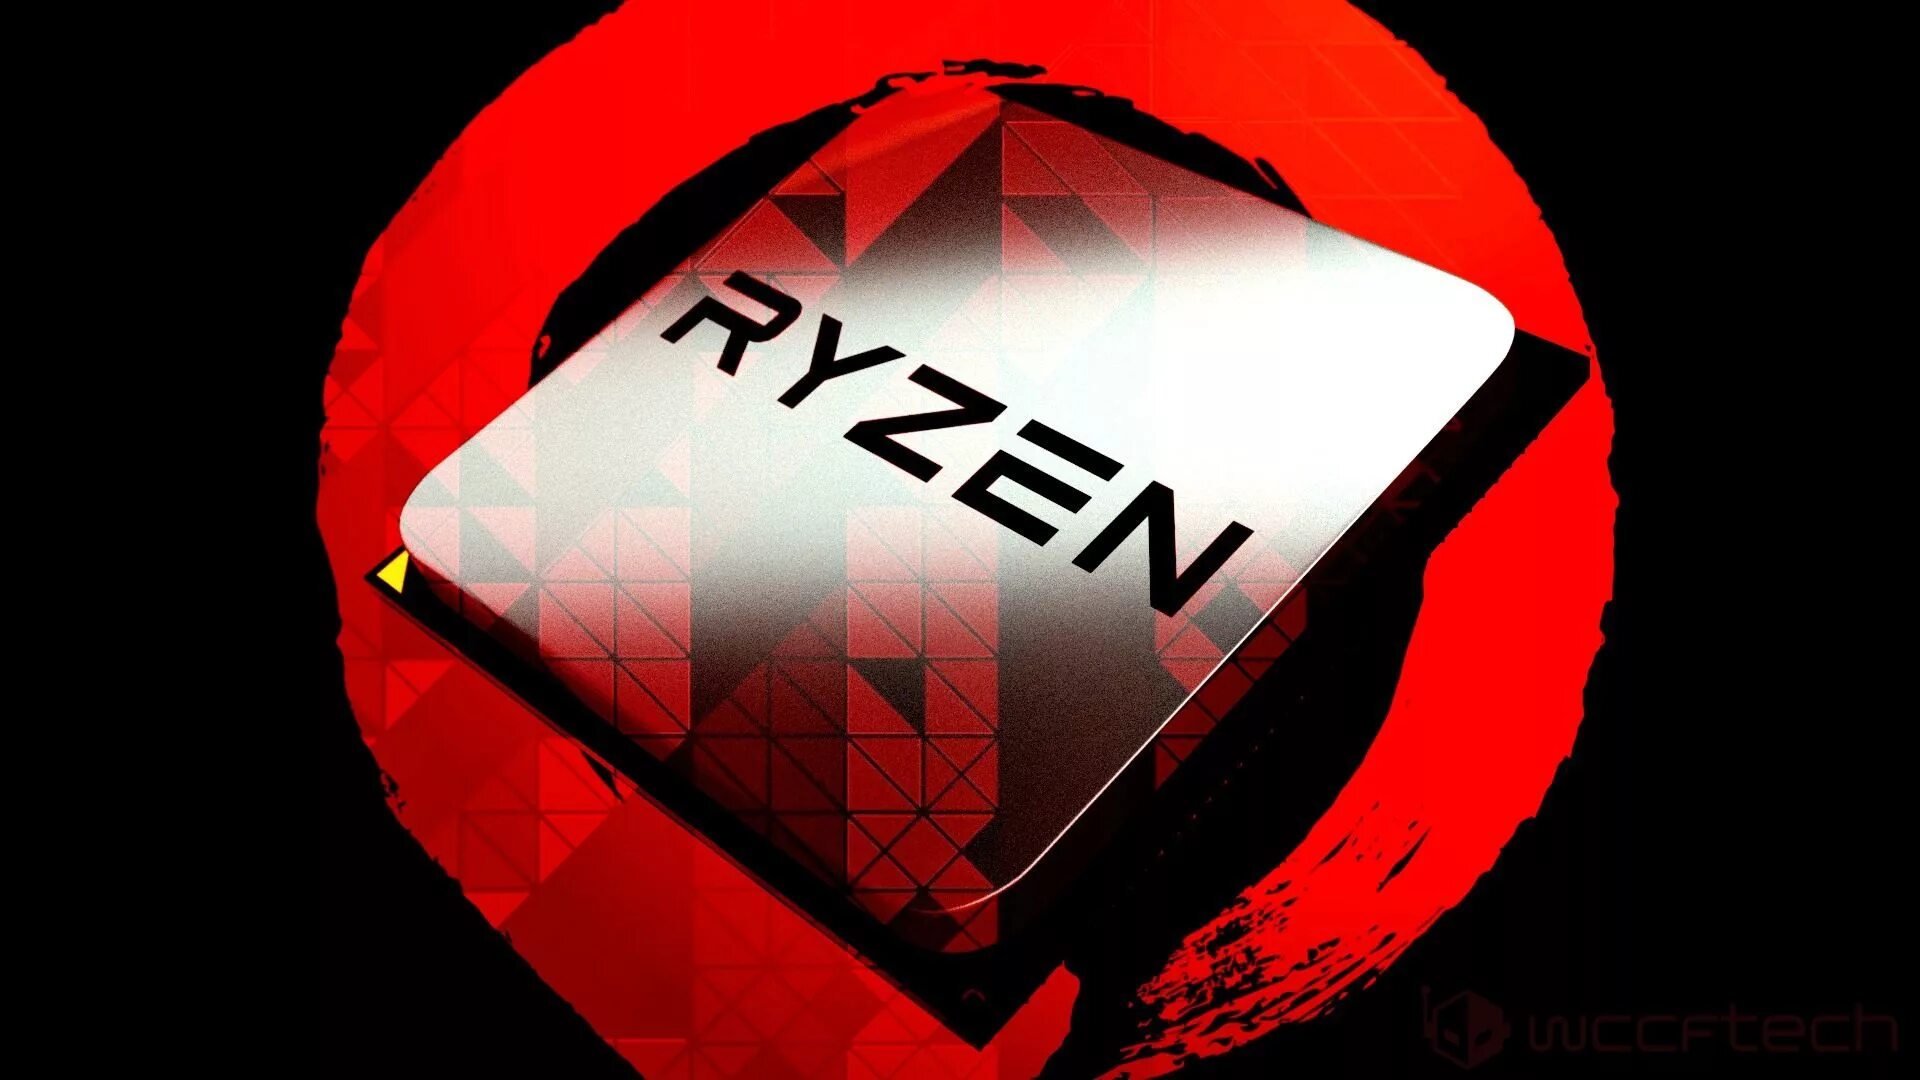 Amd 1920x1080. Логотип АМД райзен. Картинки AMD Ryzen. Заставка Ryzen. Ryzen 5 обои.